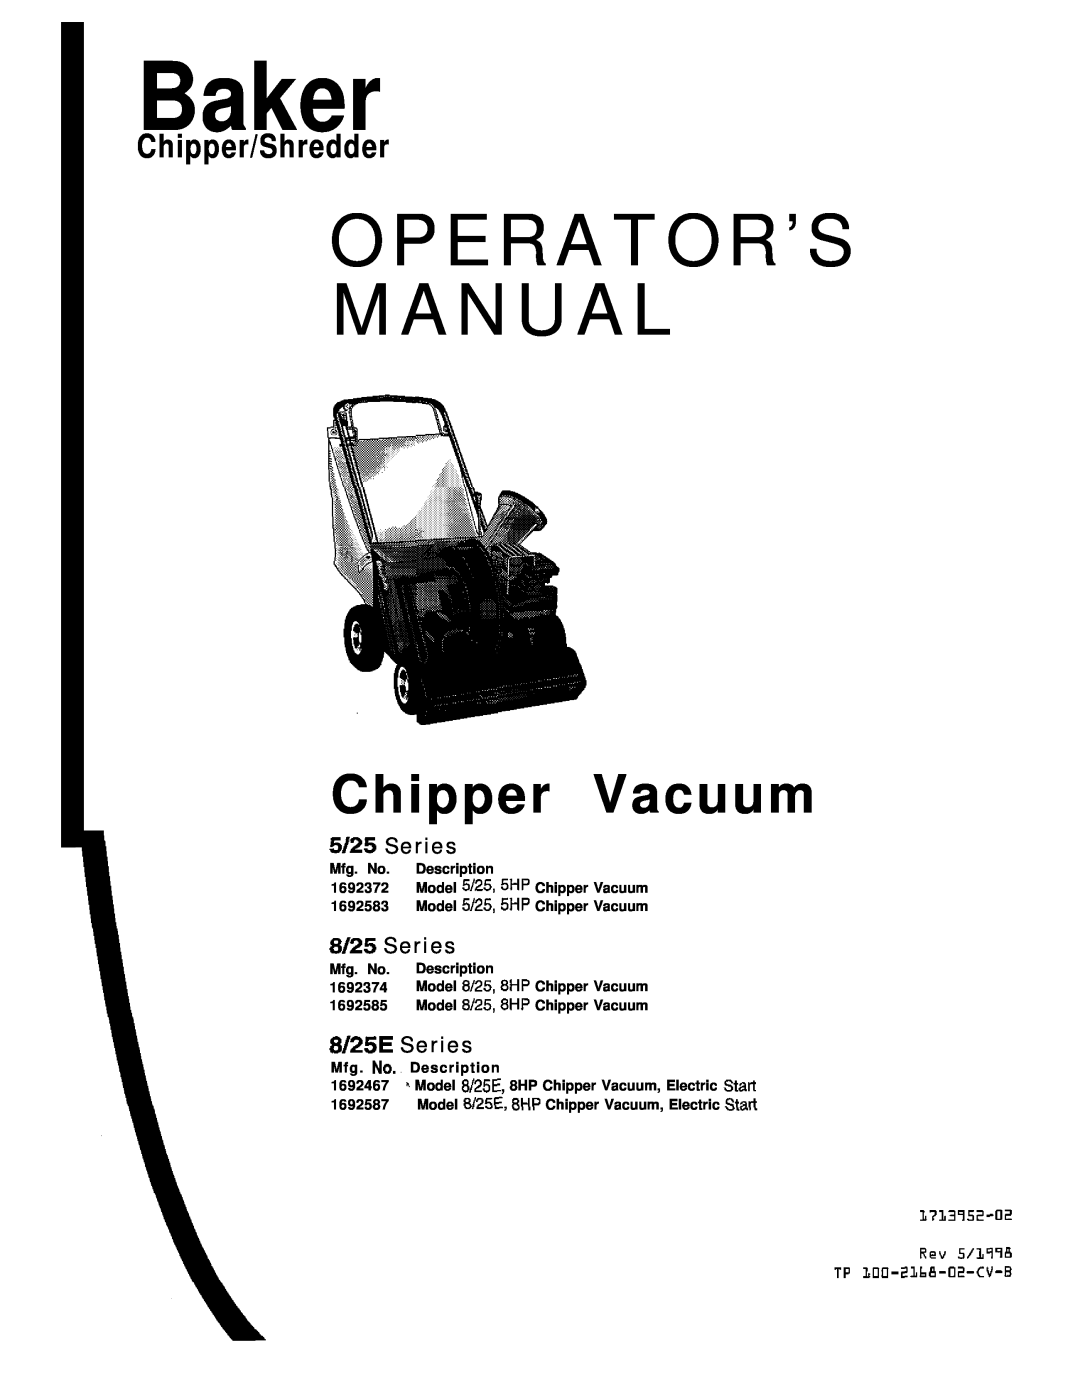 Simplicity 6/25 manual Chipper/Shredder, Baker, Operator’S Manual, Chipper Vacuum, 8/25E Series 